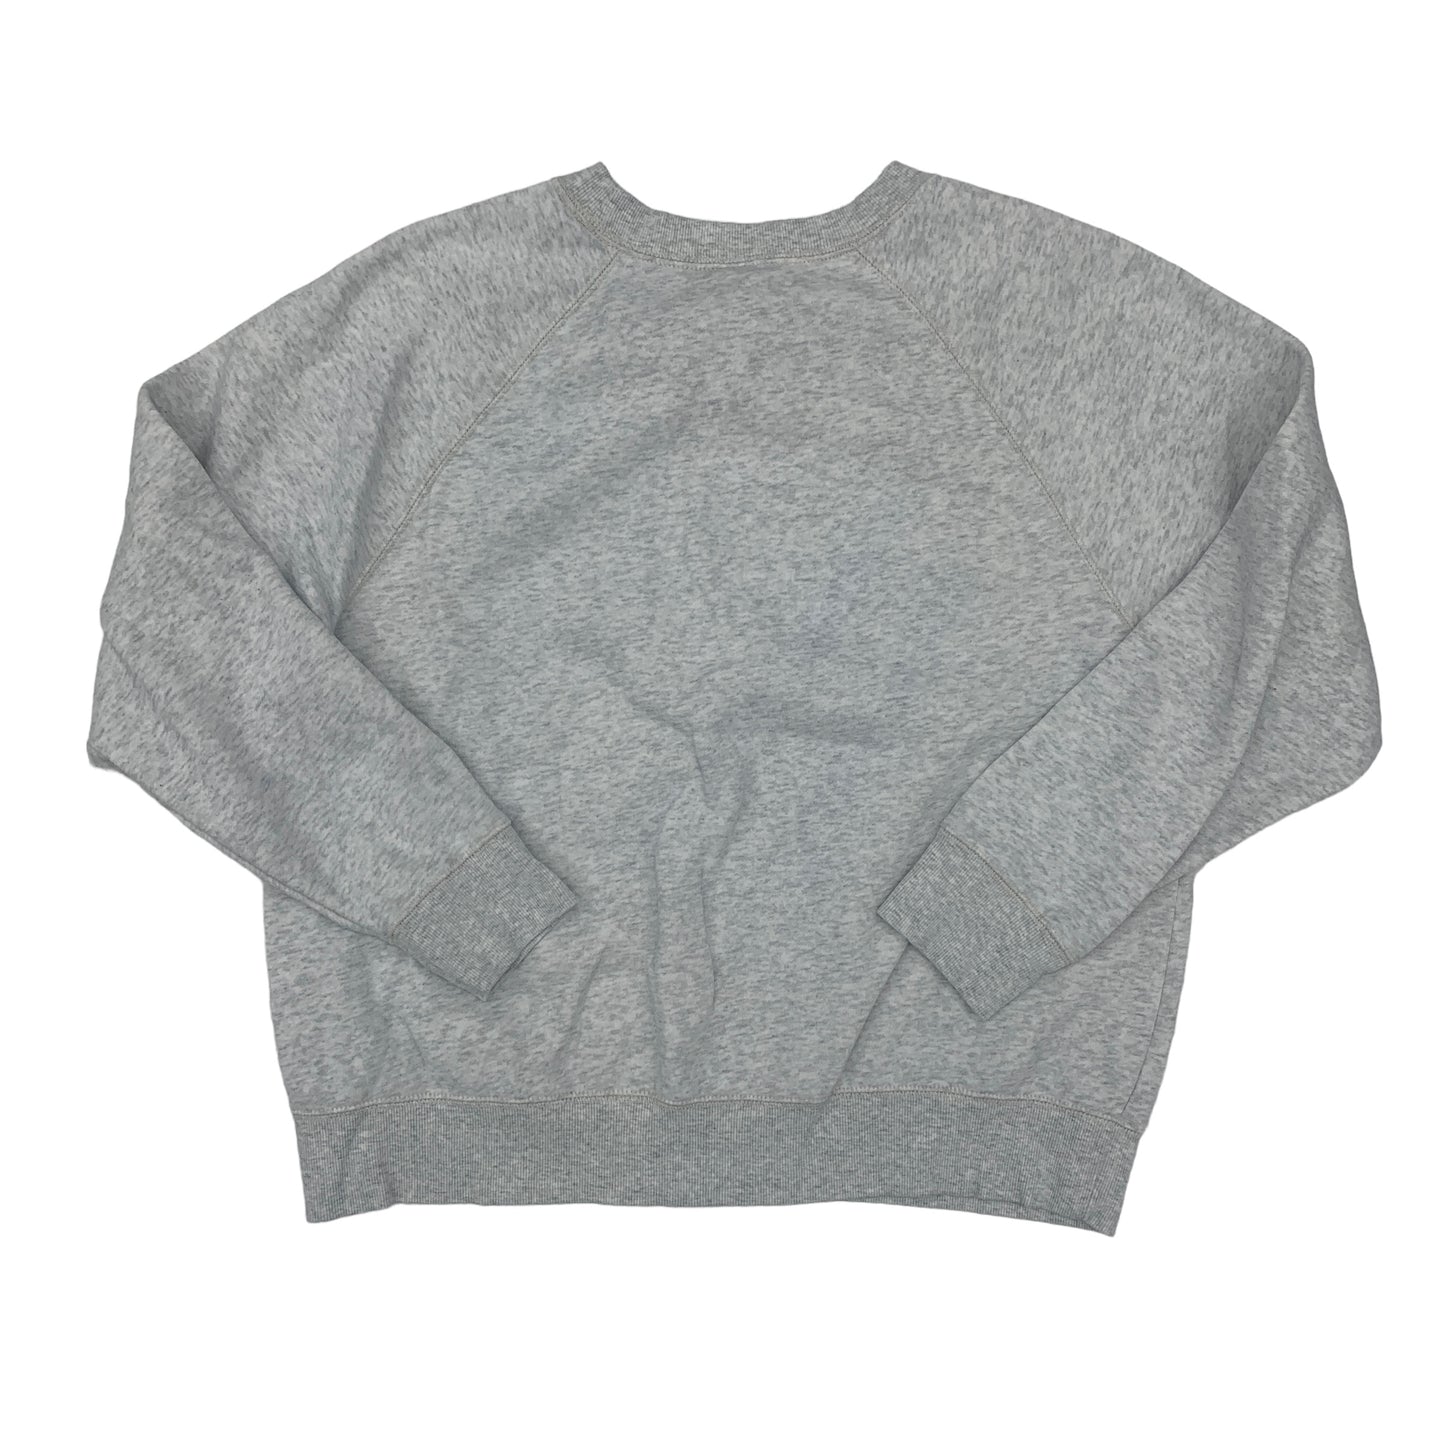 Sweatshirt Crewneck By Old Navy  Size: L